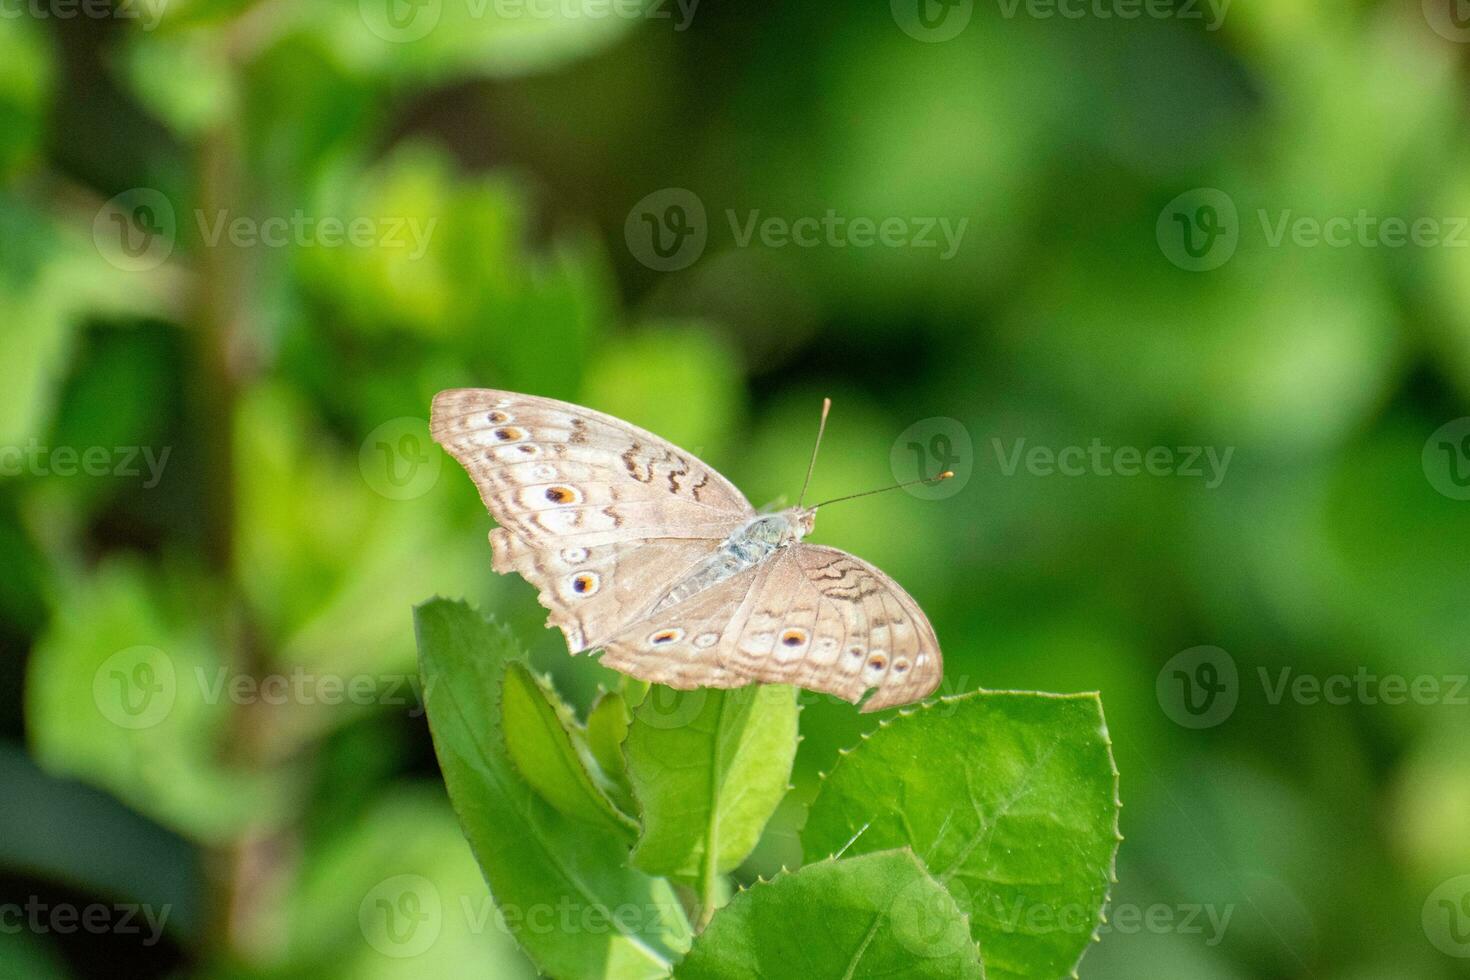 gris pensamiento mariposa encaramado en causanis trifolia hoja. hermosa junonia atletas mariposas objeto en centrar de foto